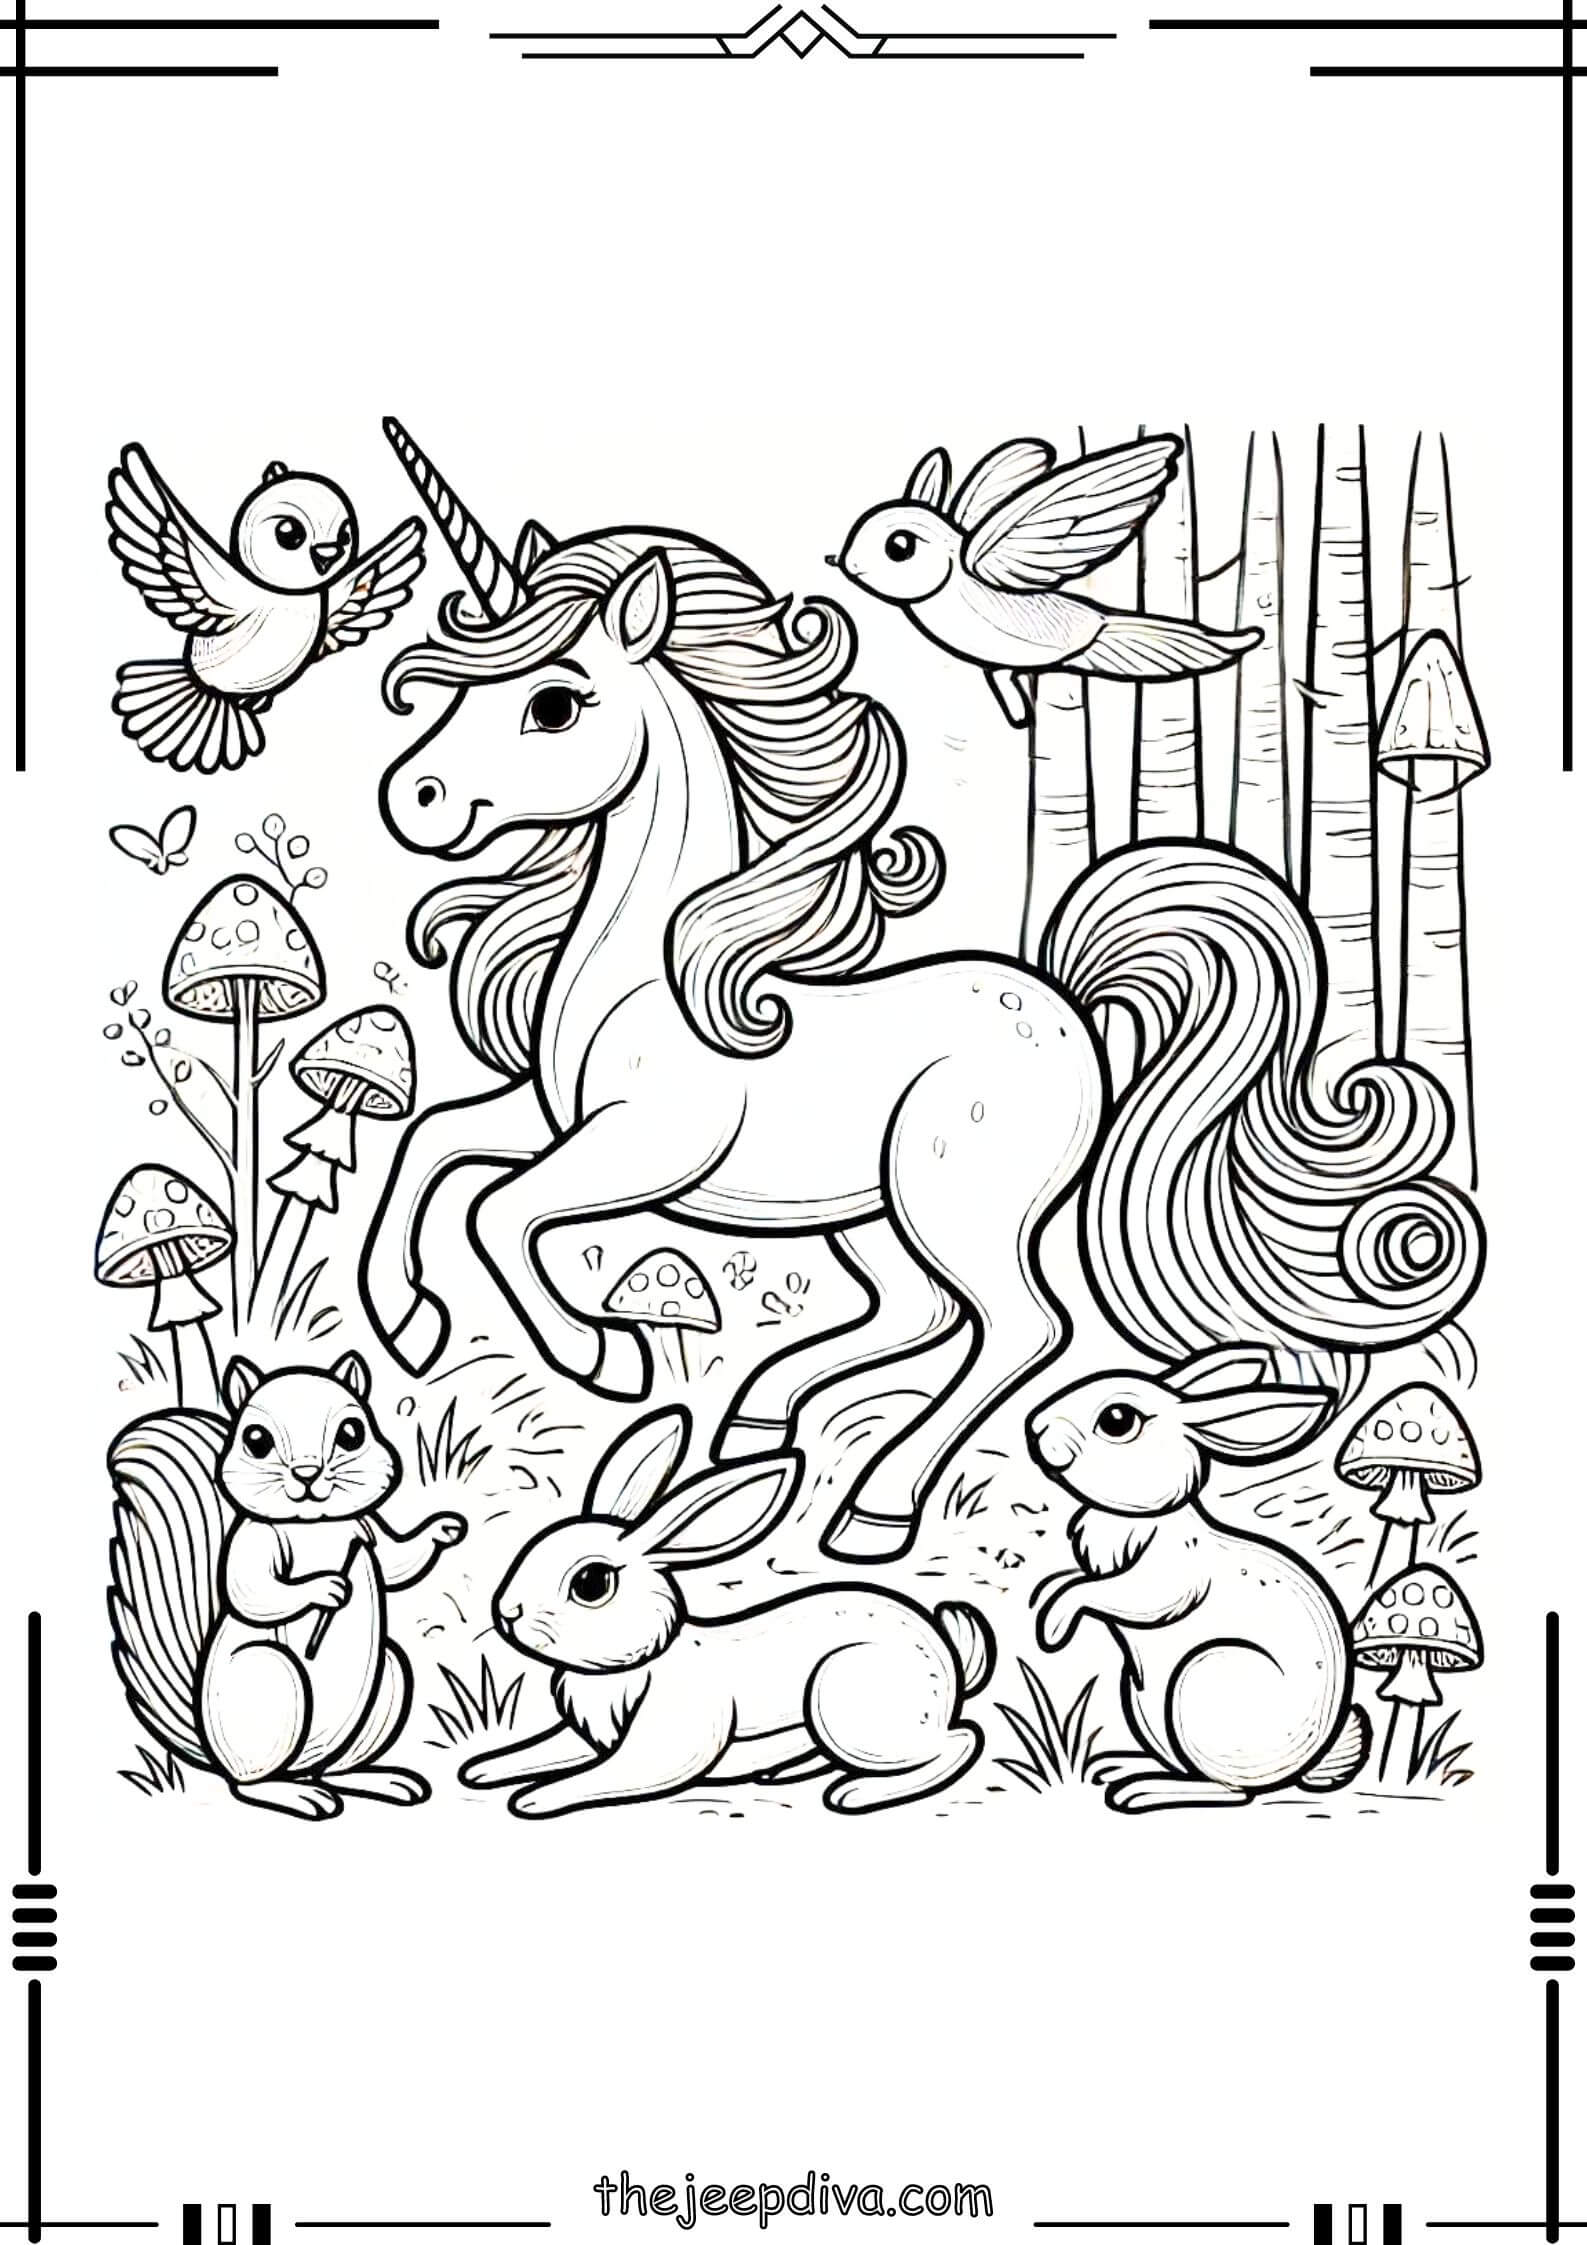 unicorn-coloring-page-medium-24